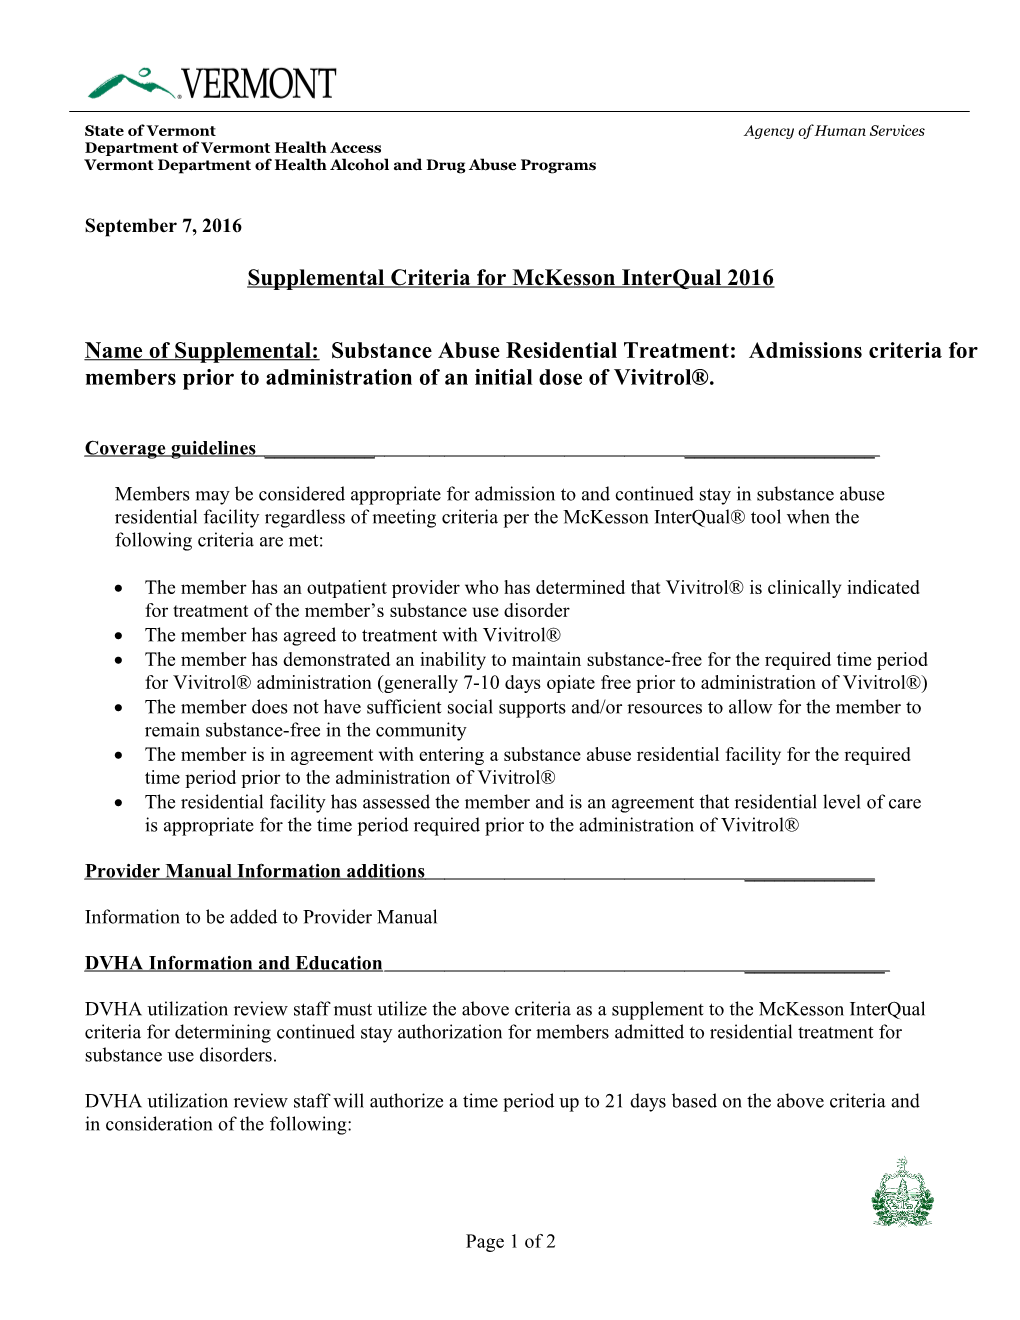 Supplemental Criteria for Mckesson Interqual 2016